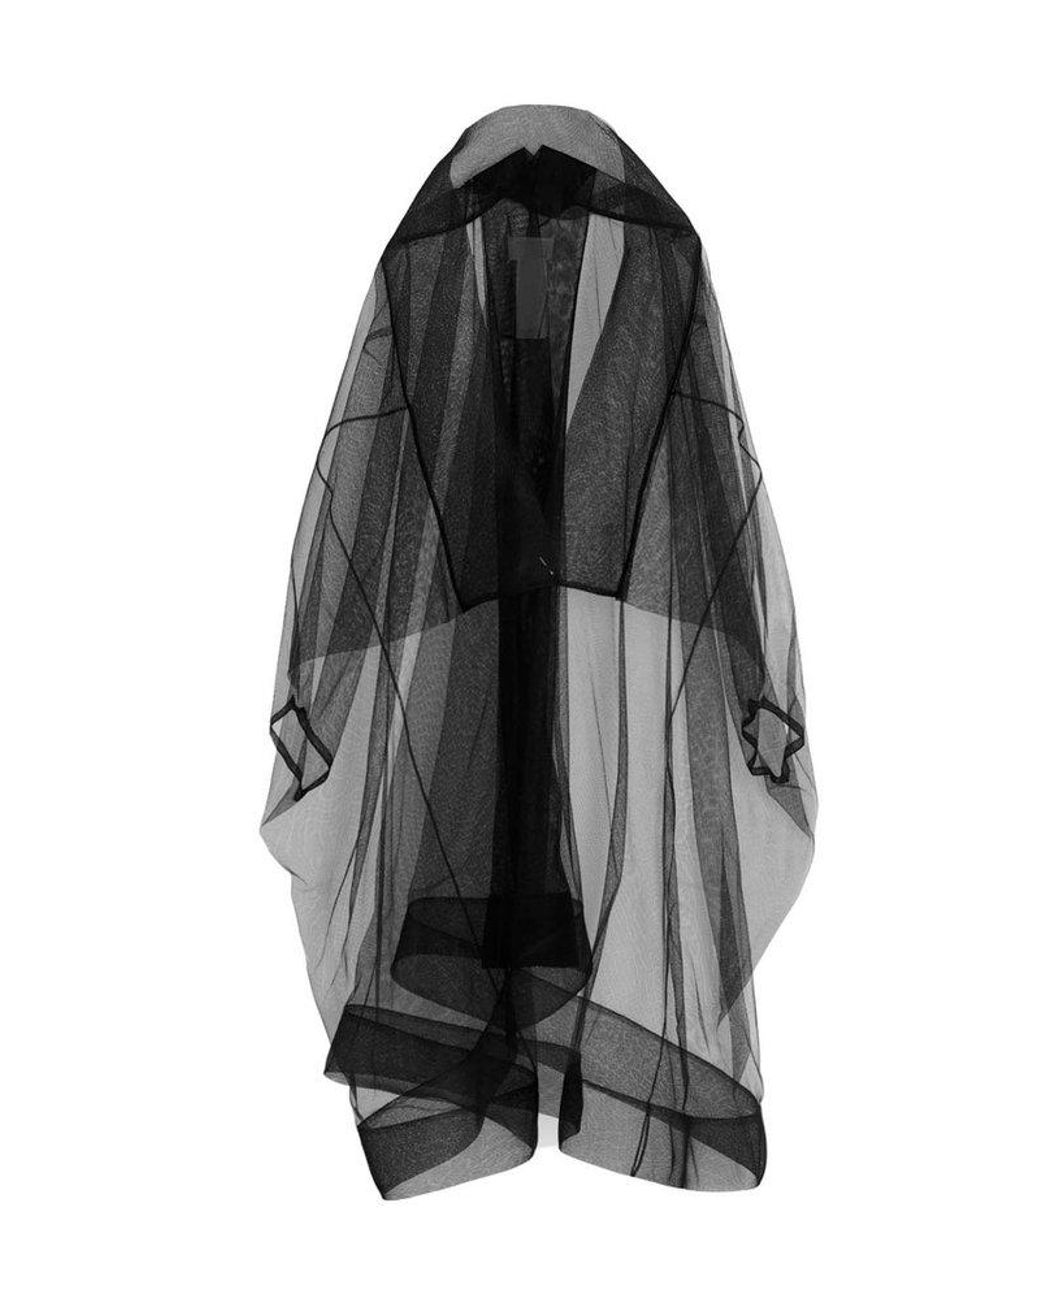 Maison Margiela Oversized Semi-sheer Tulle Coat in Black